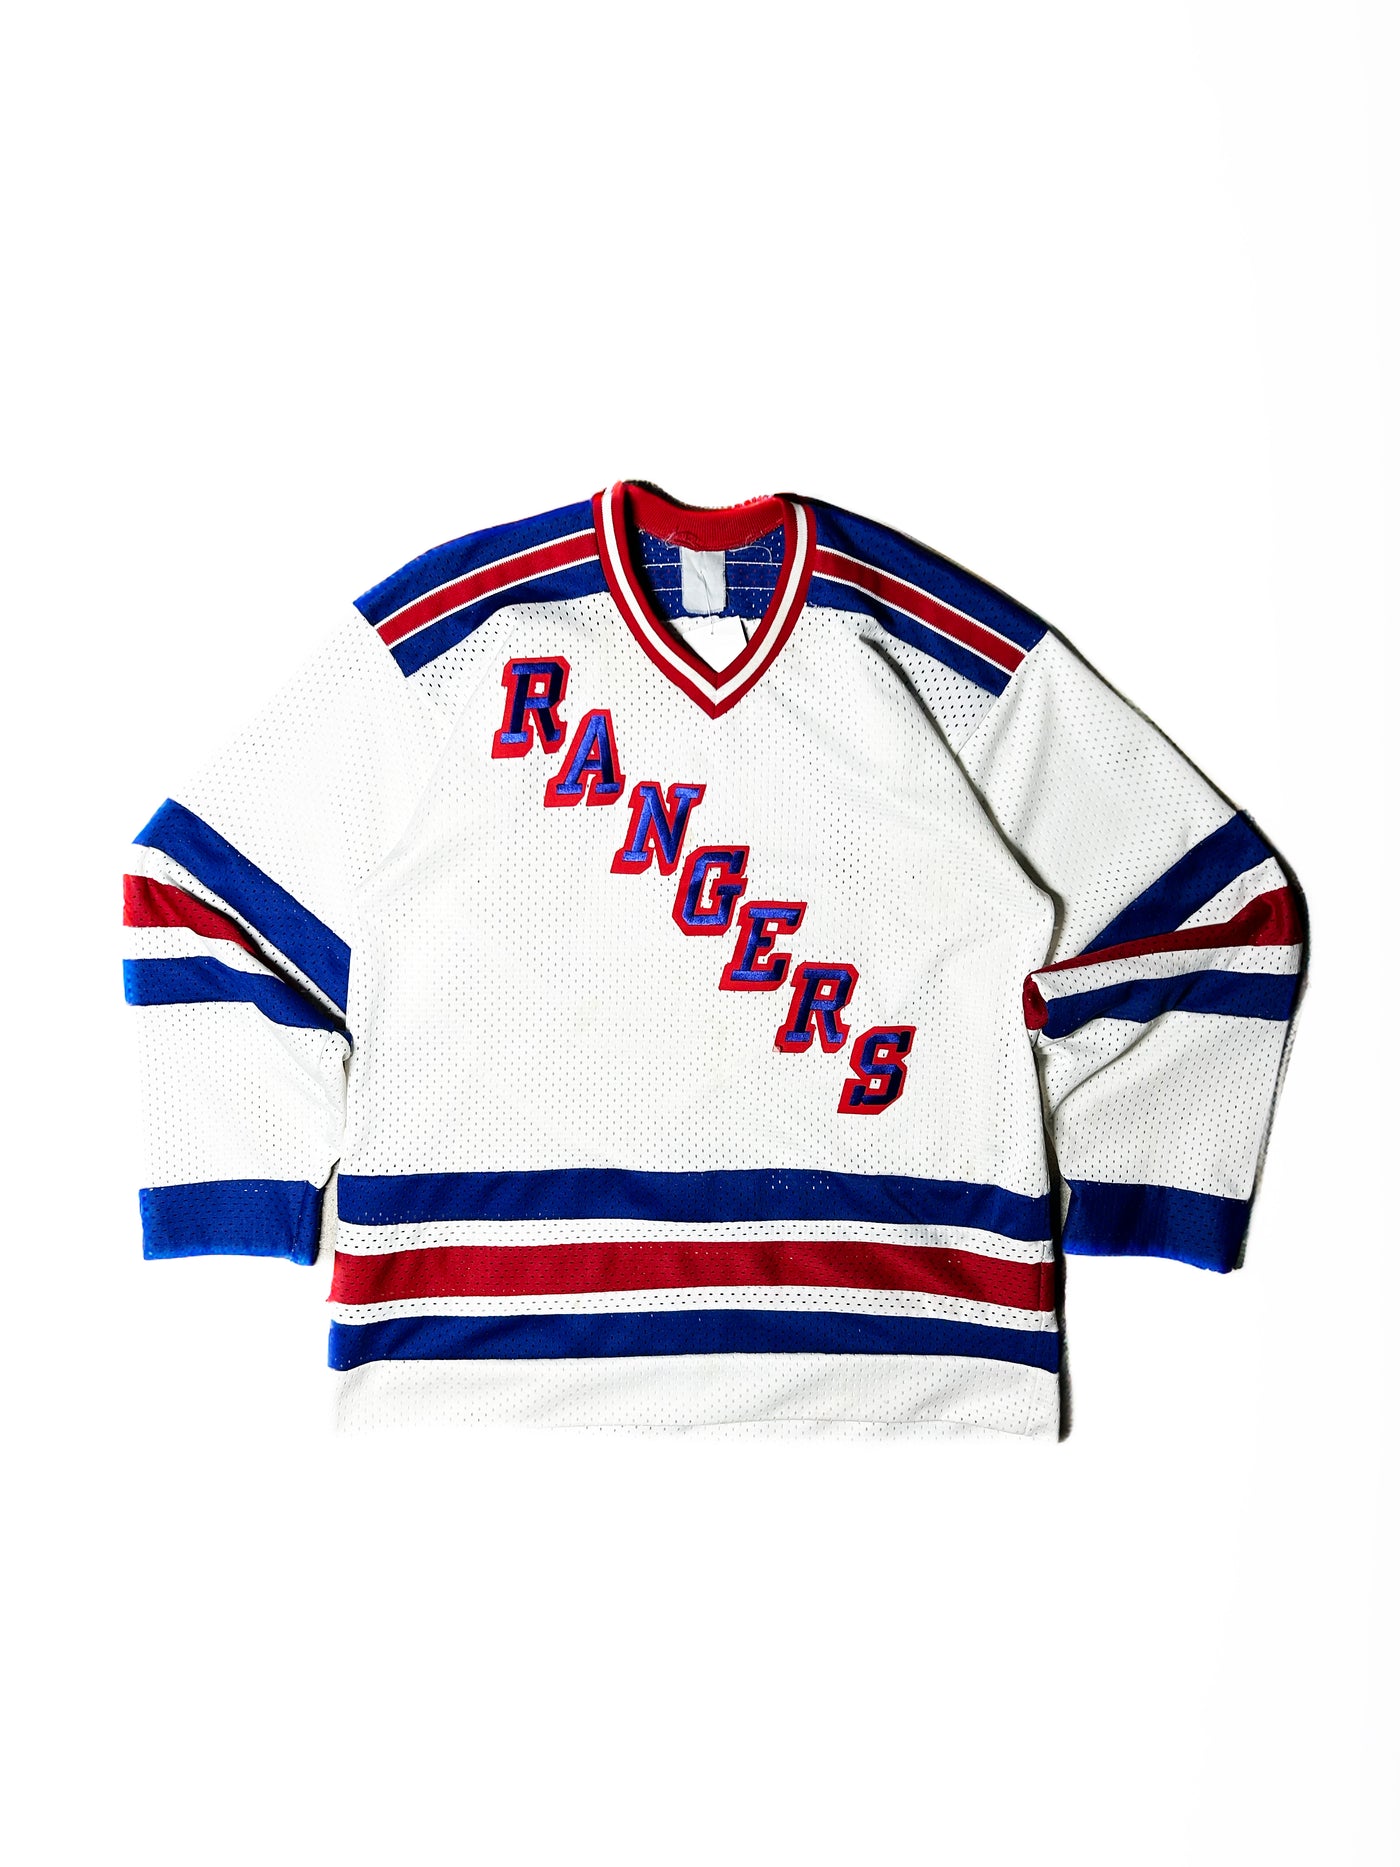 Vintage 90s New York Islanders Jersey 